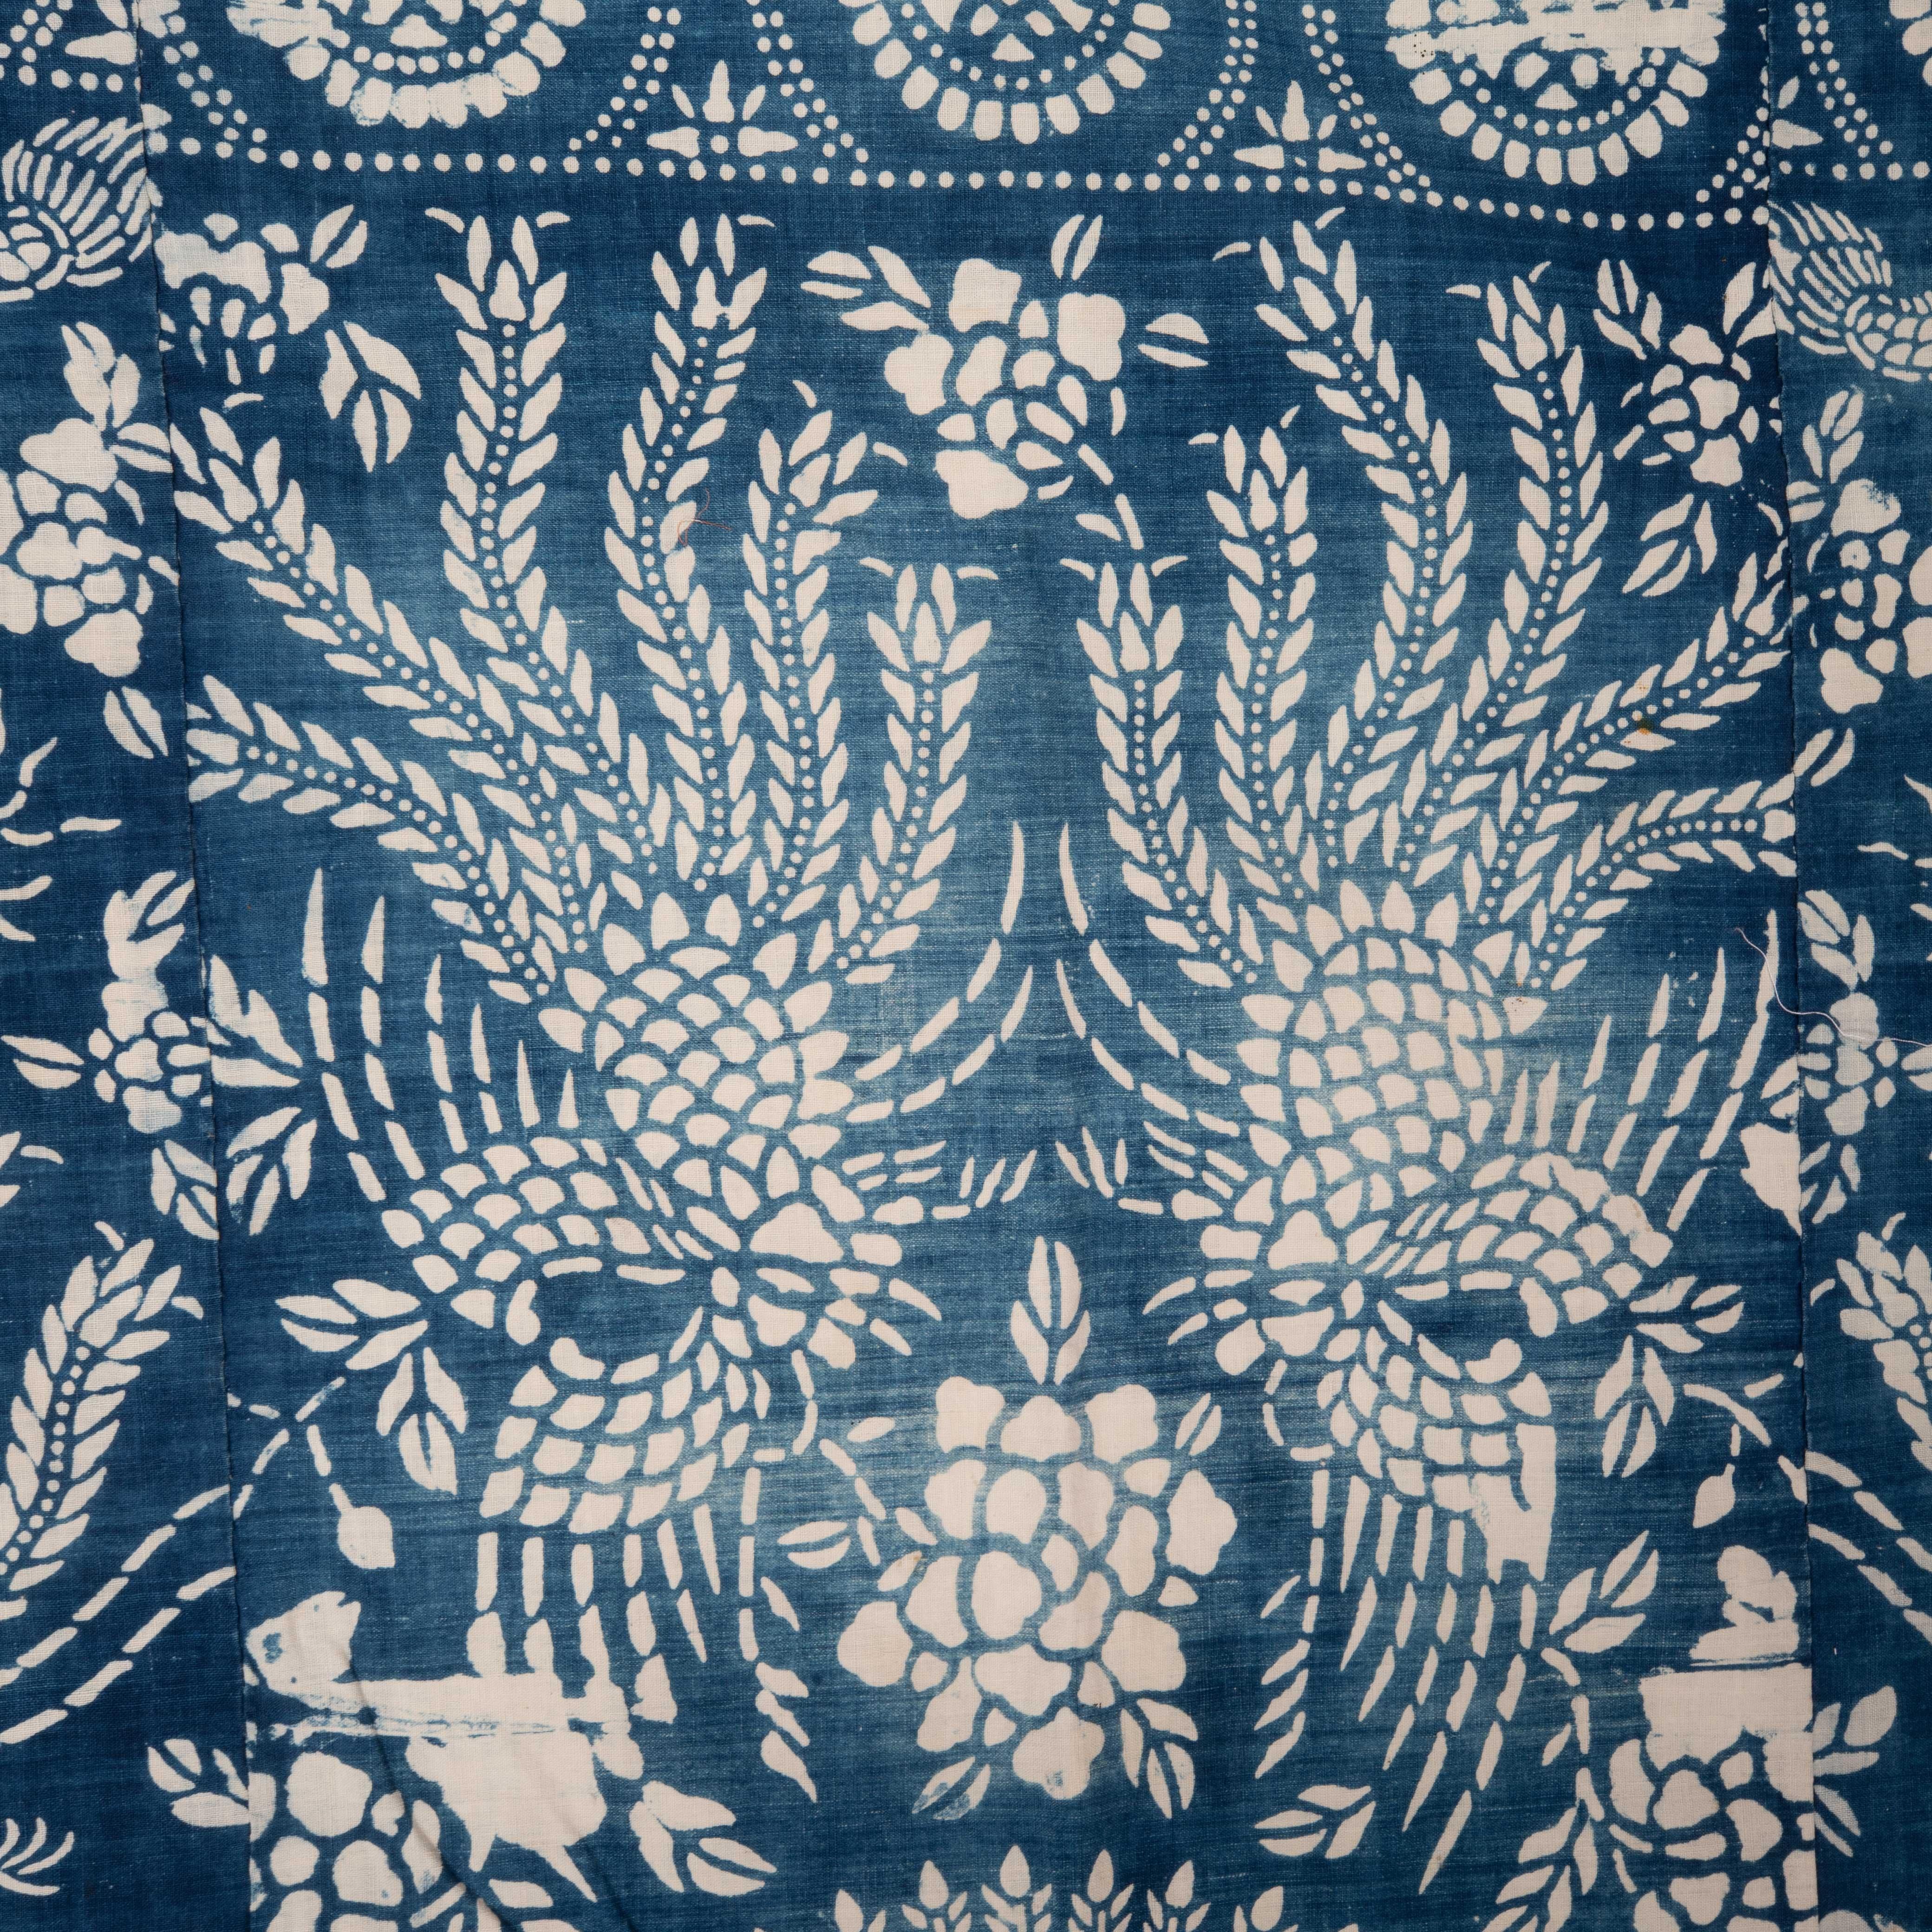 20th Century Vintage Chinese Indigo Batik Cover